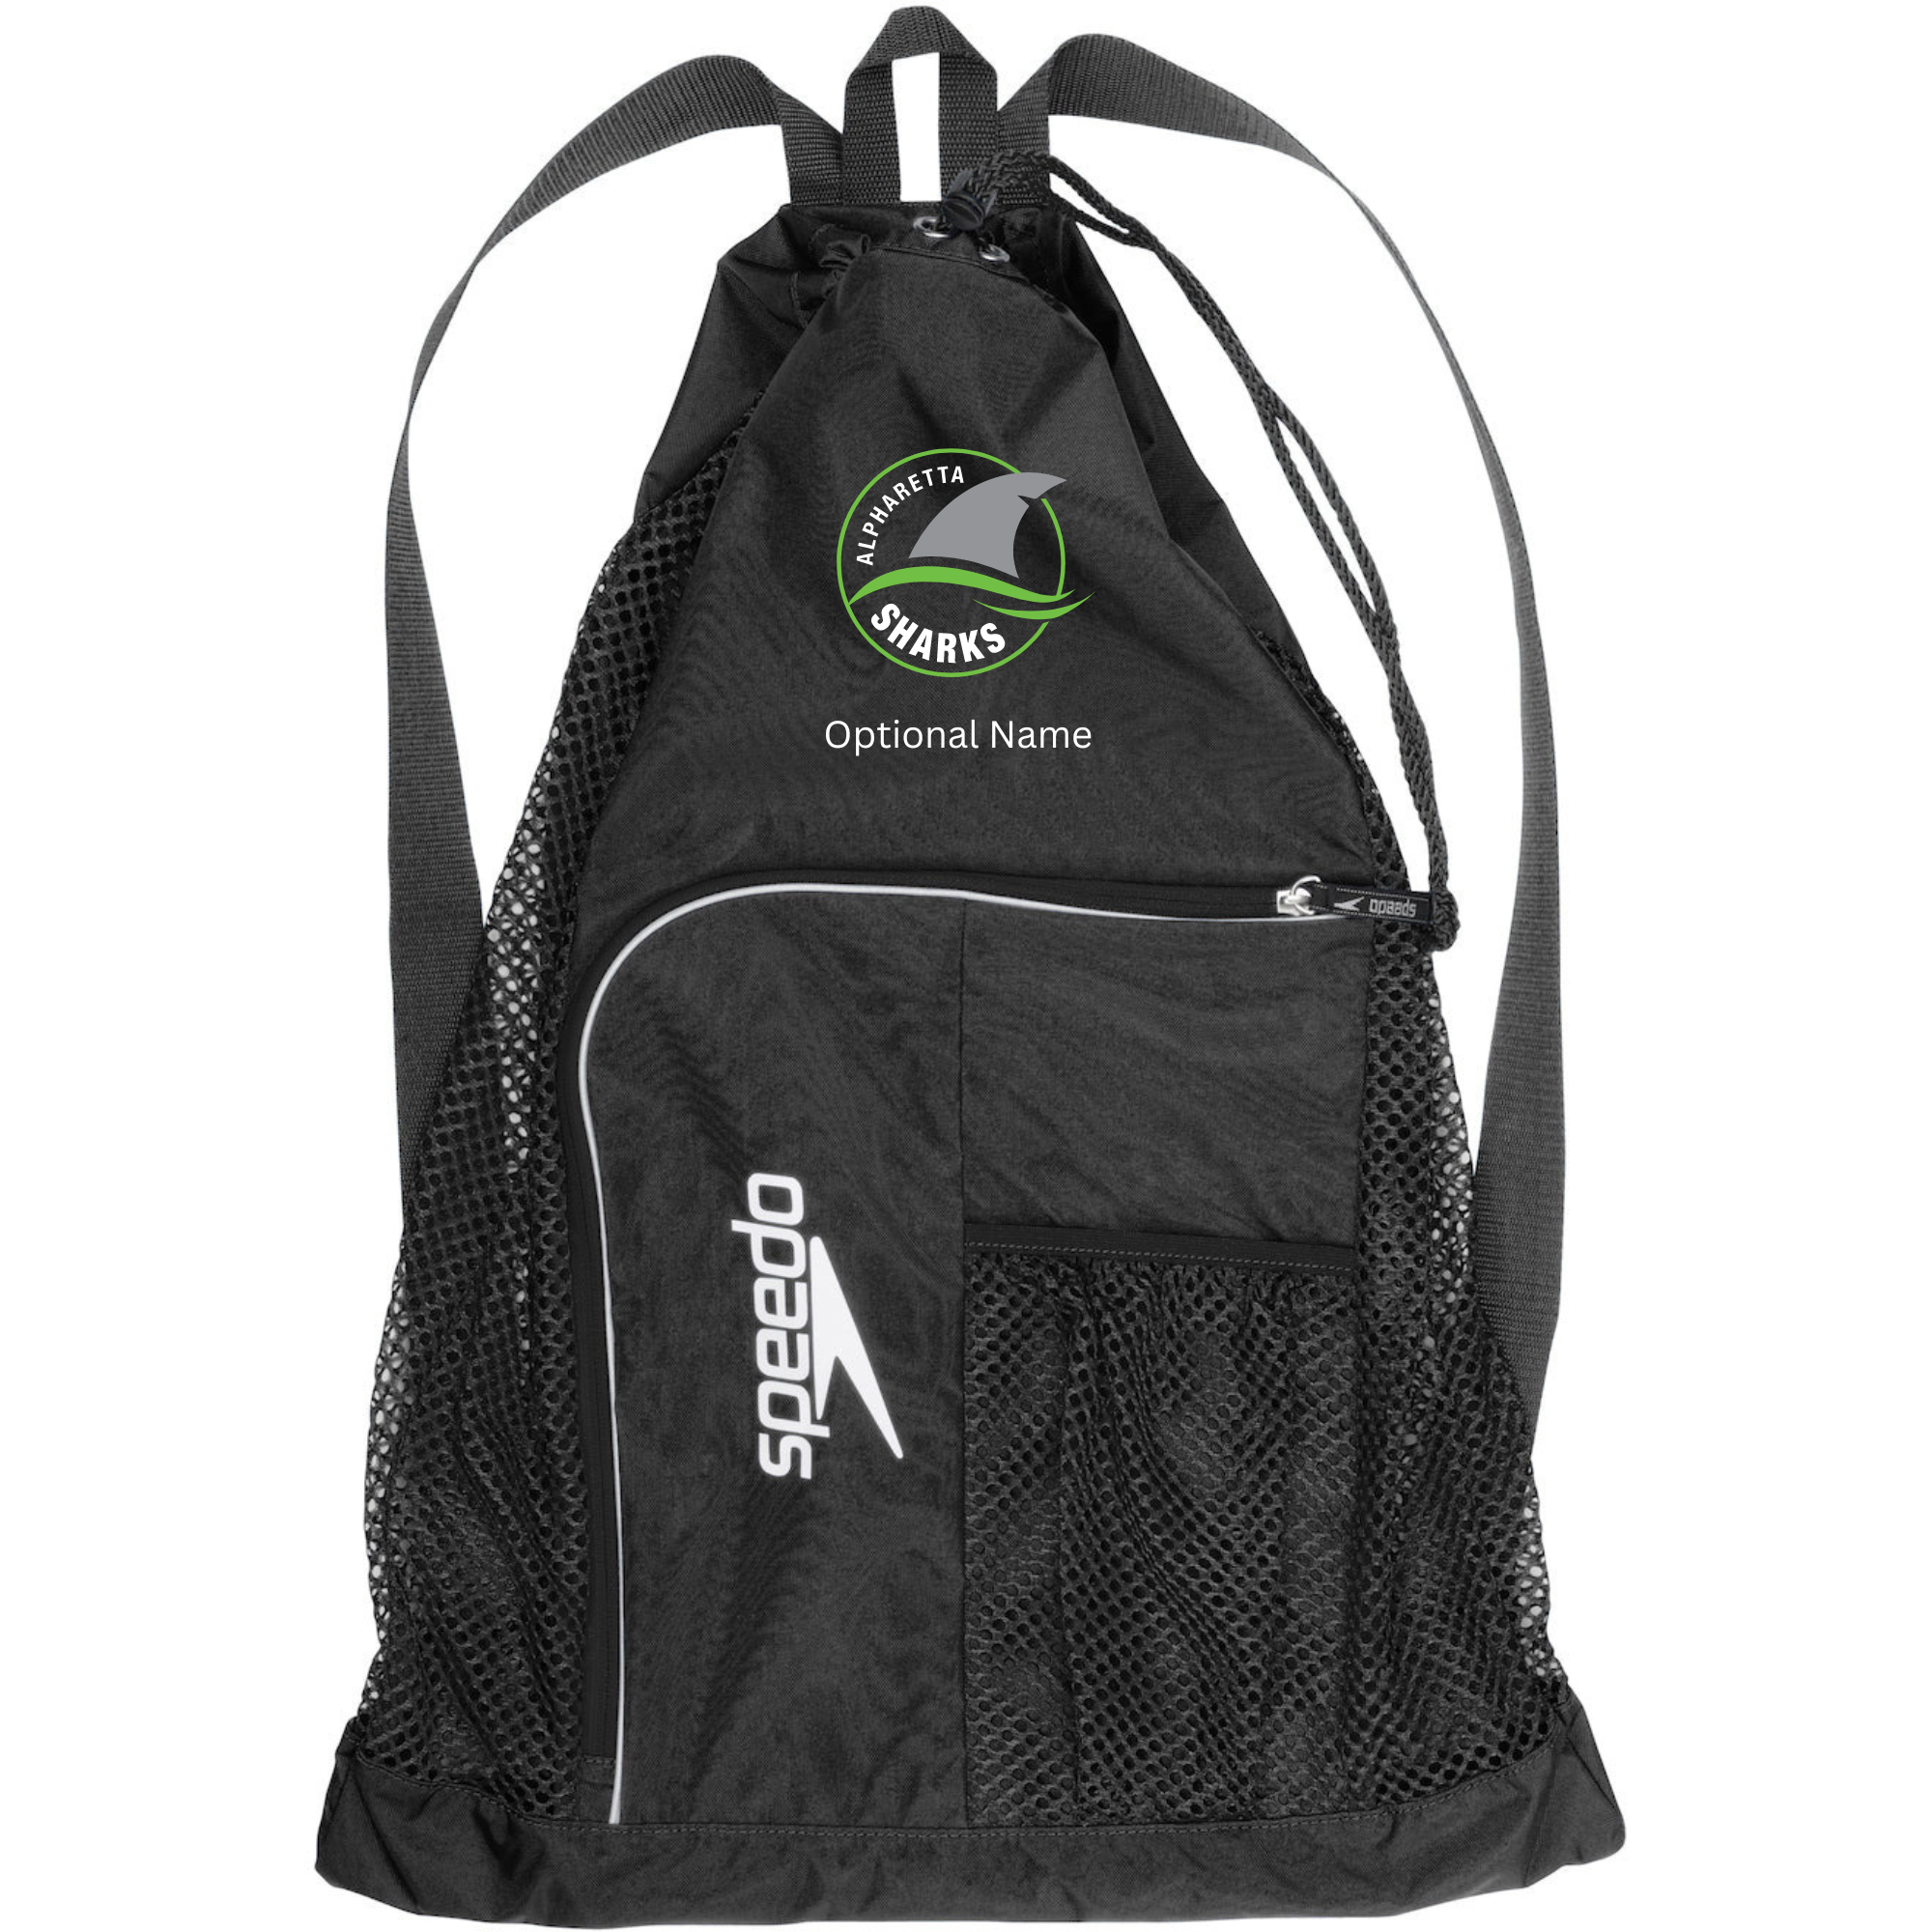 Speedo Deluxe Ventilator Backpack (Customized) - Alpharetta